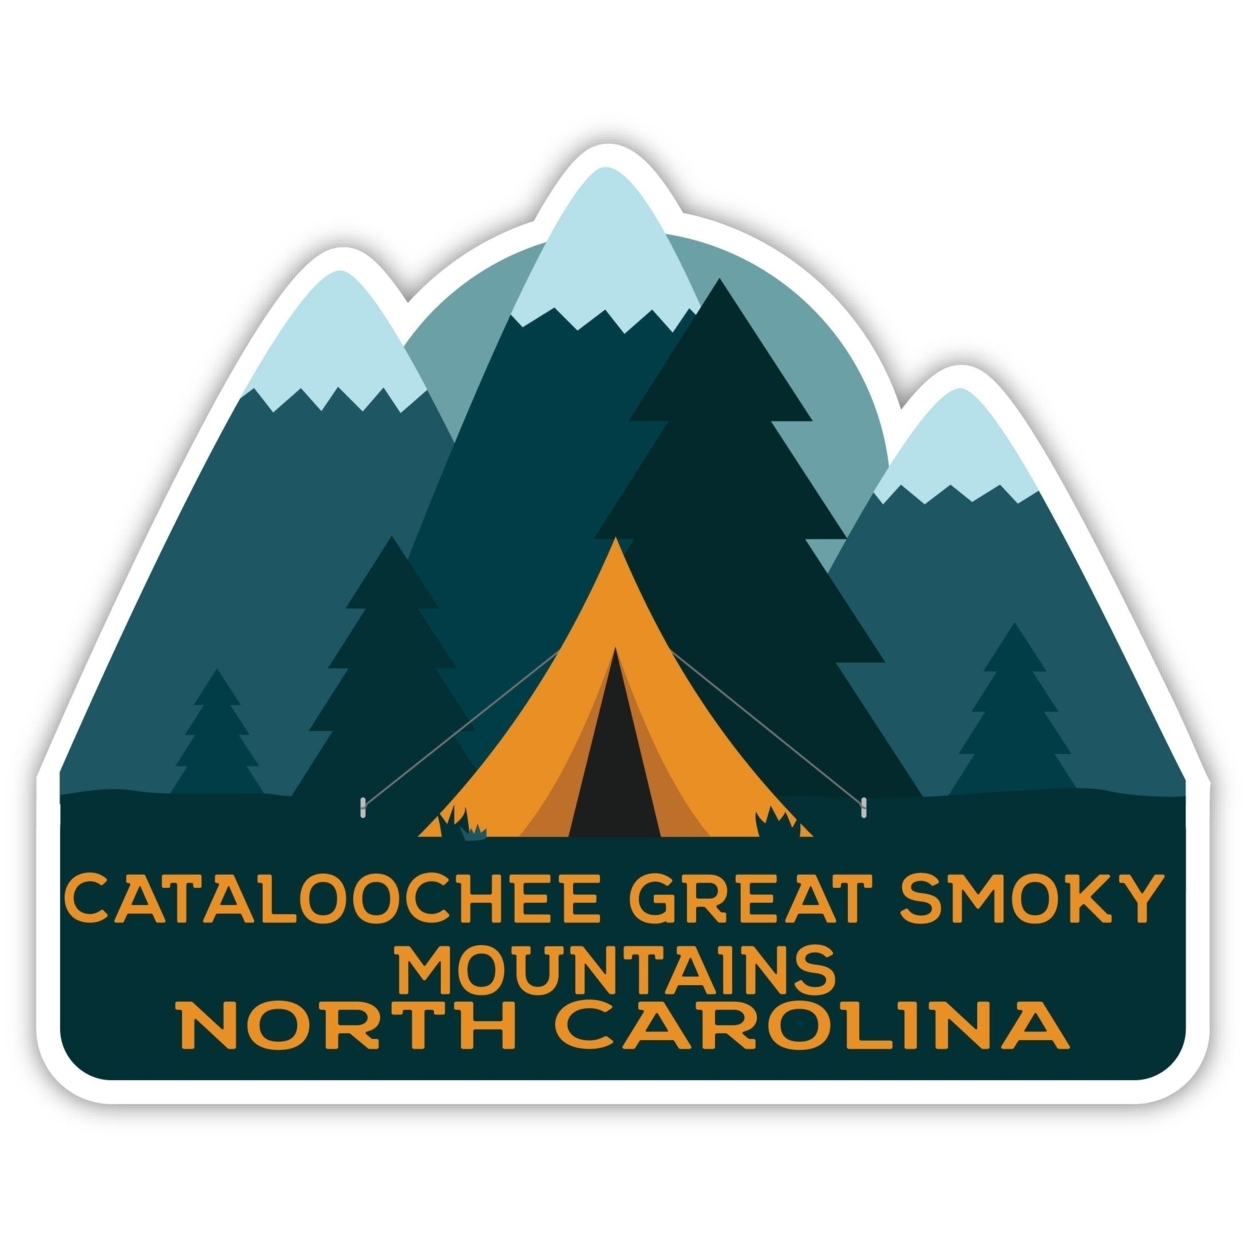 Cataloochee Great Smoky Mountains North Carolina Souvenir Decorative Stickers (Choose Theme And Size) - Single Unit, 10-Inch, Tent